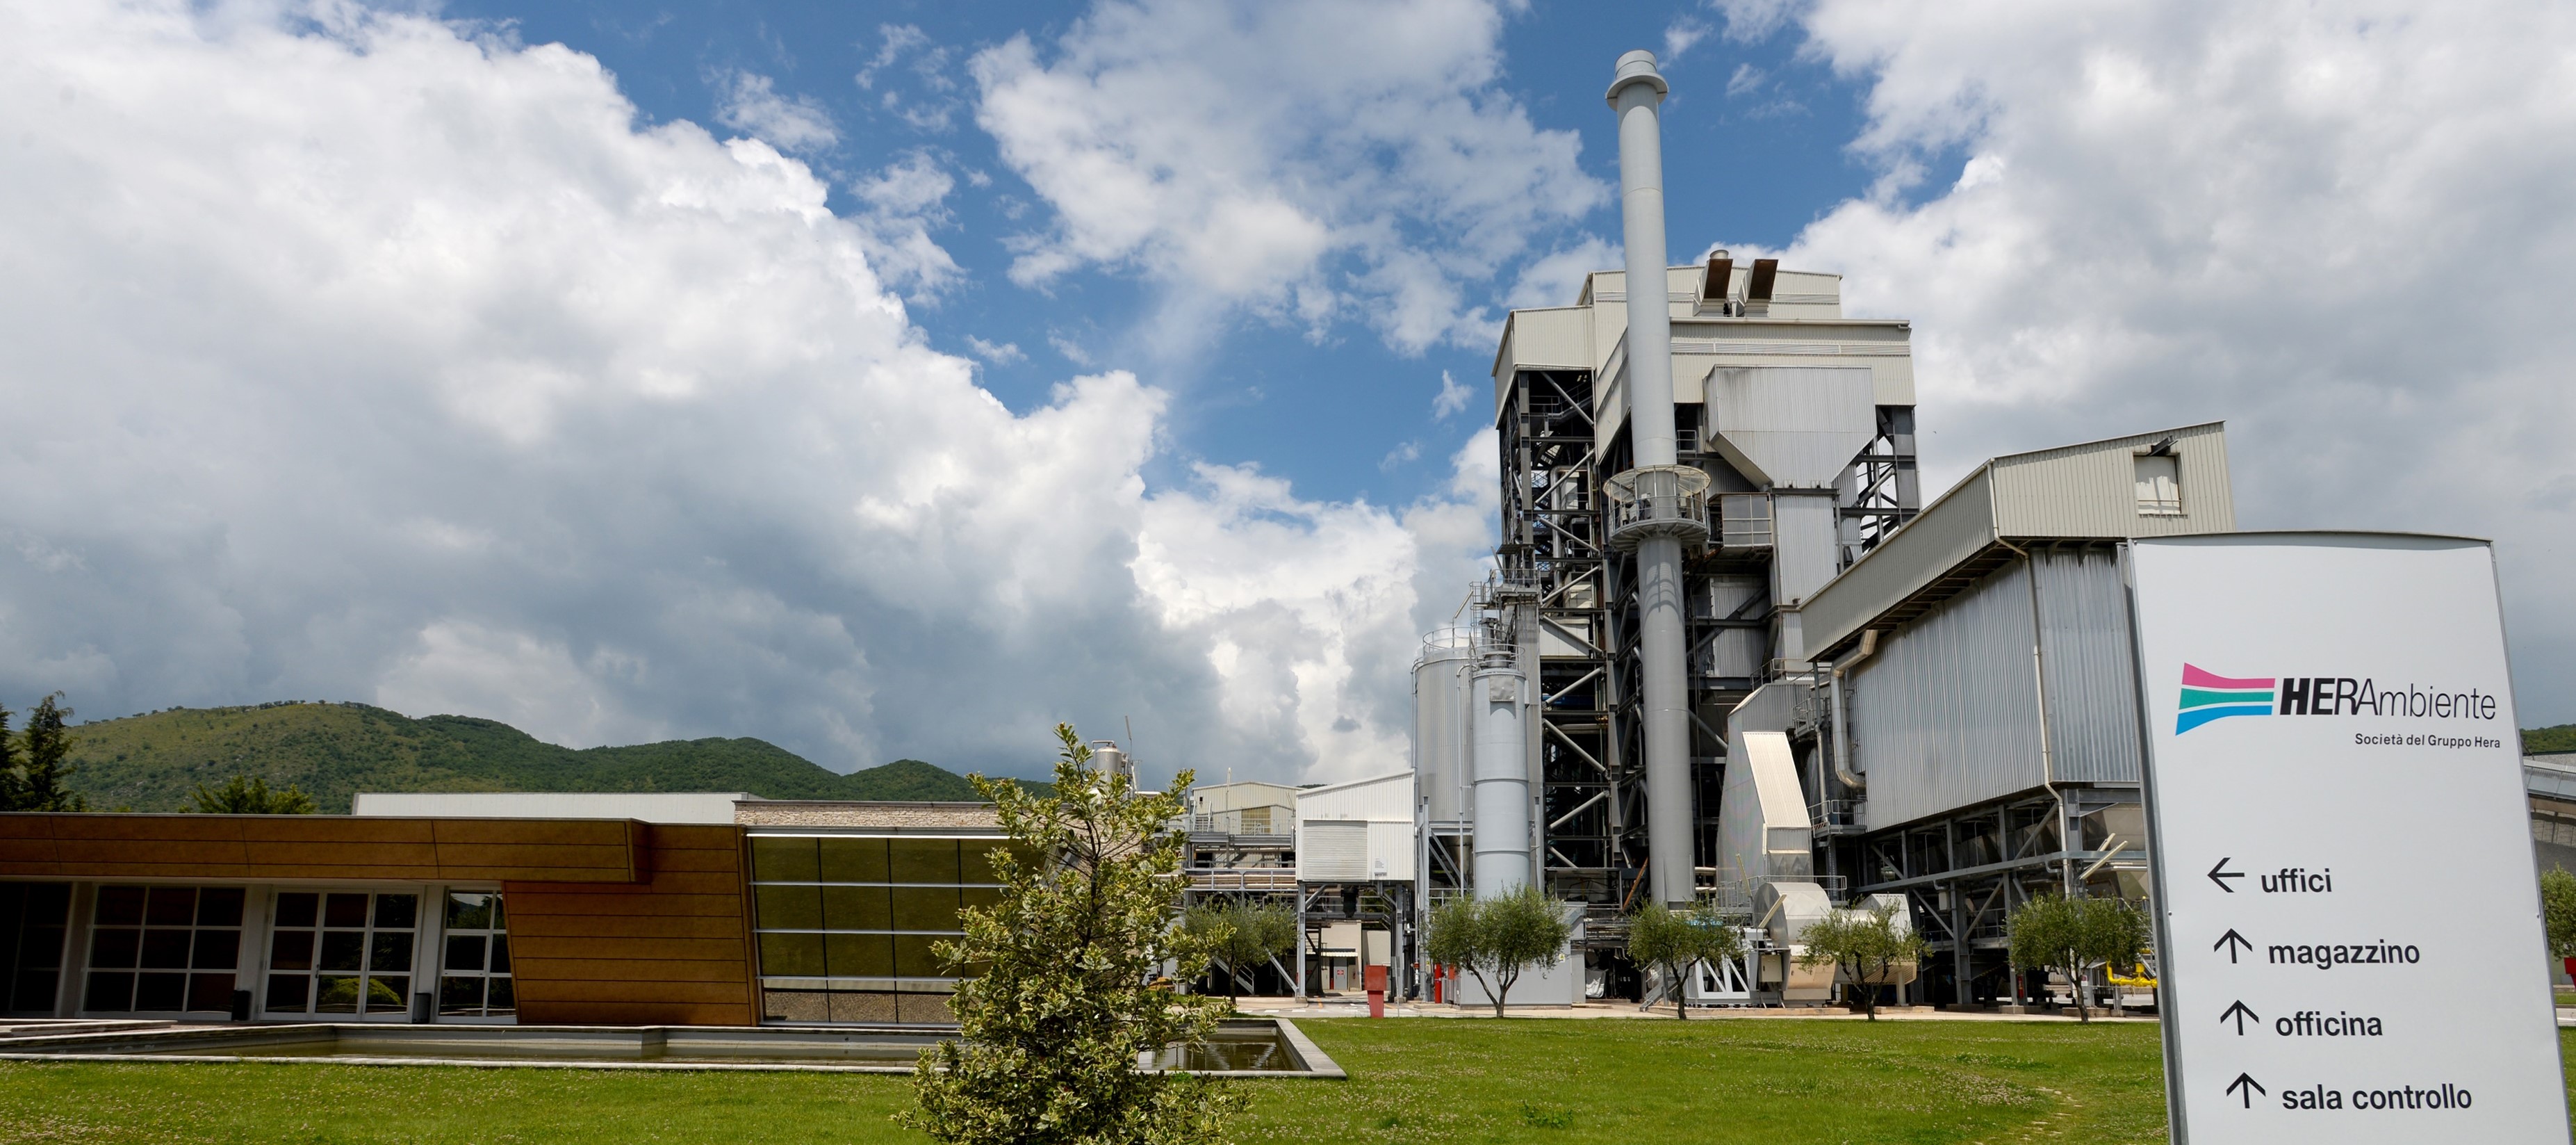 Entrance of Waste-to-energy plant Pozzilli